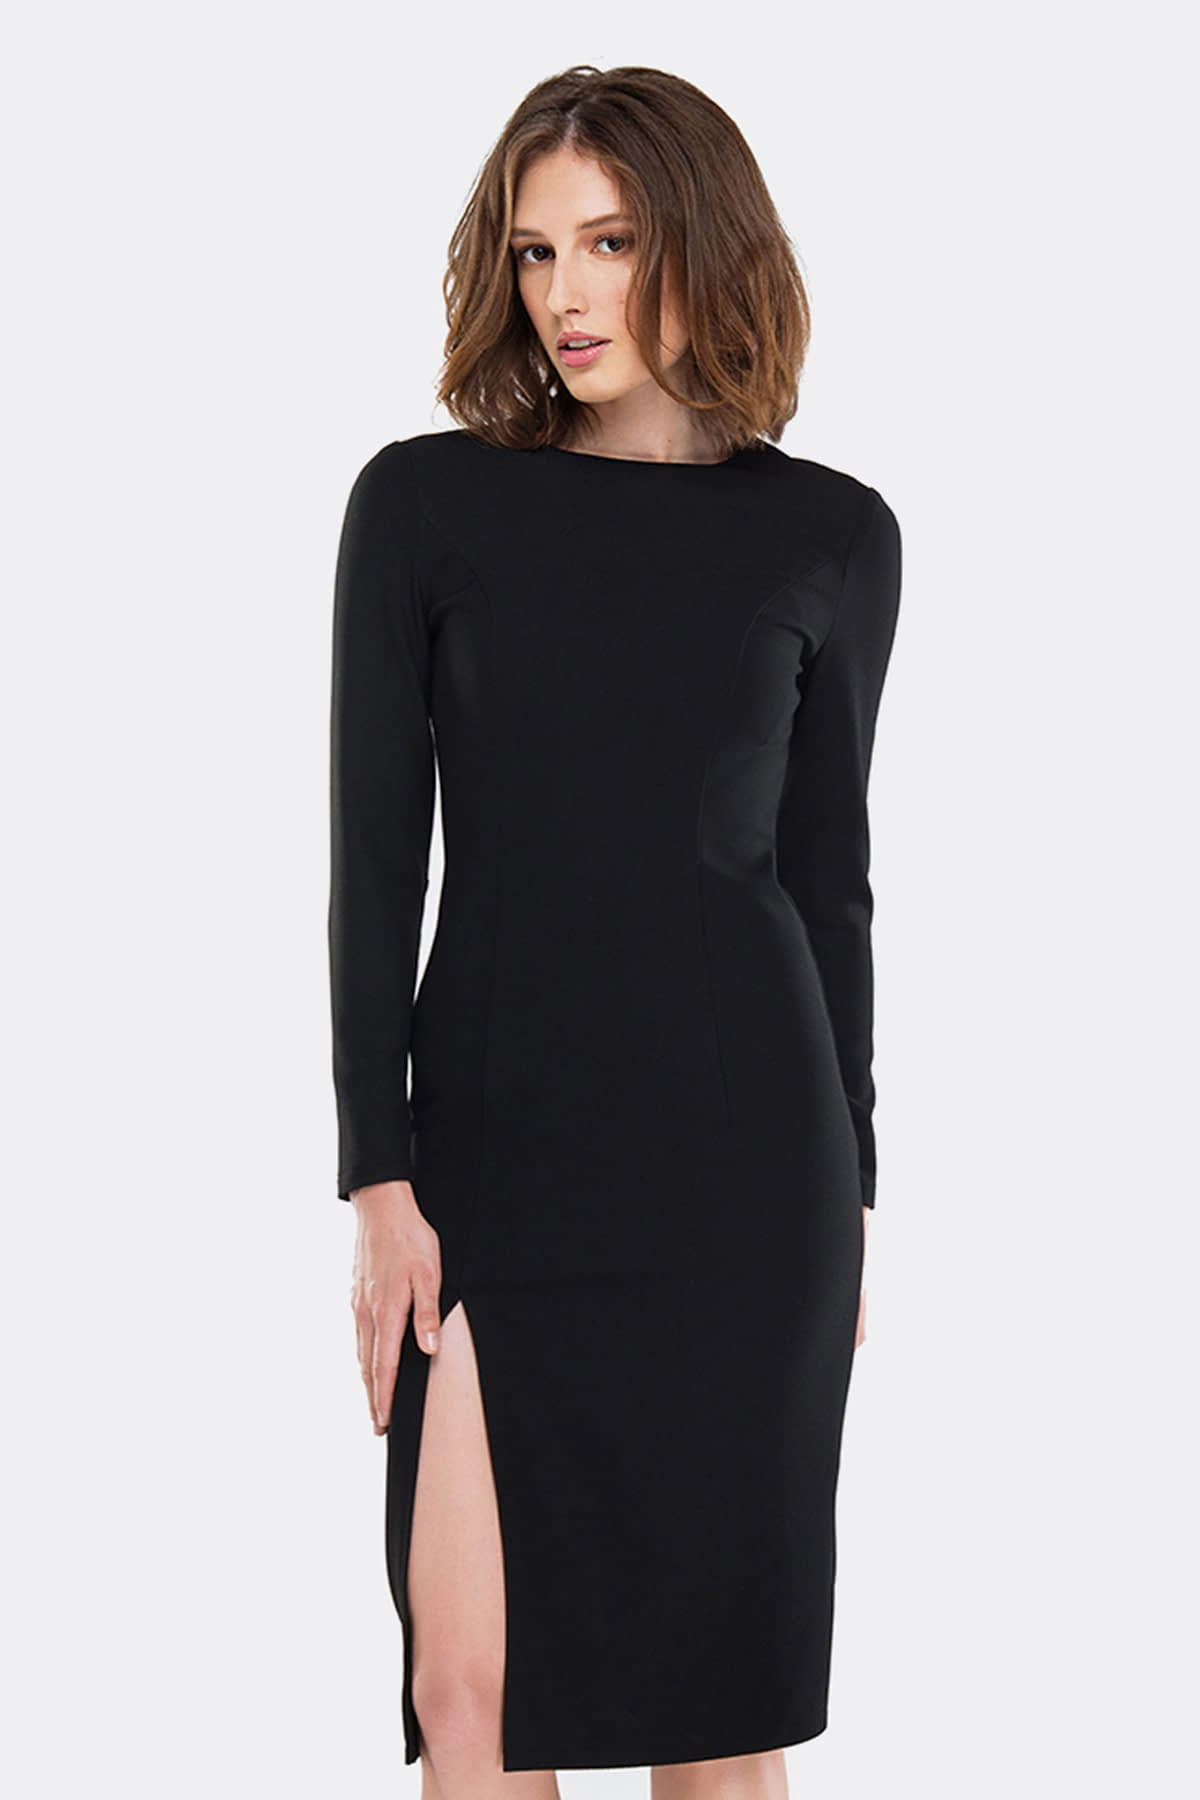 Black column dress with a slit, photo 1